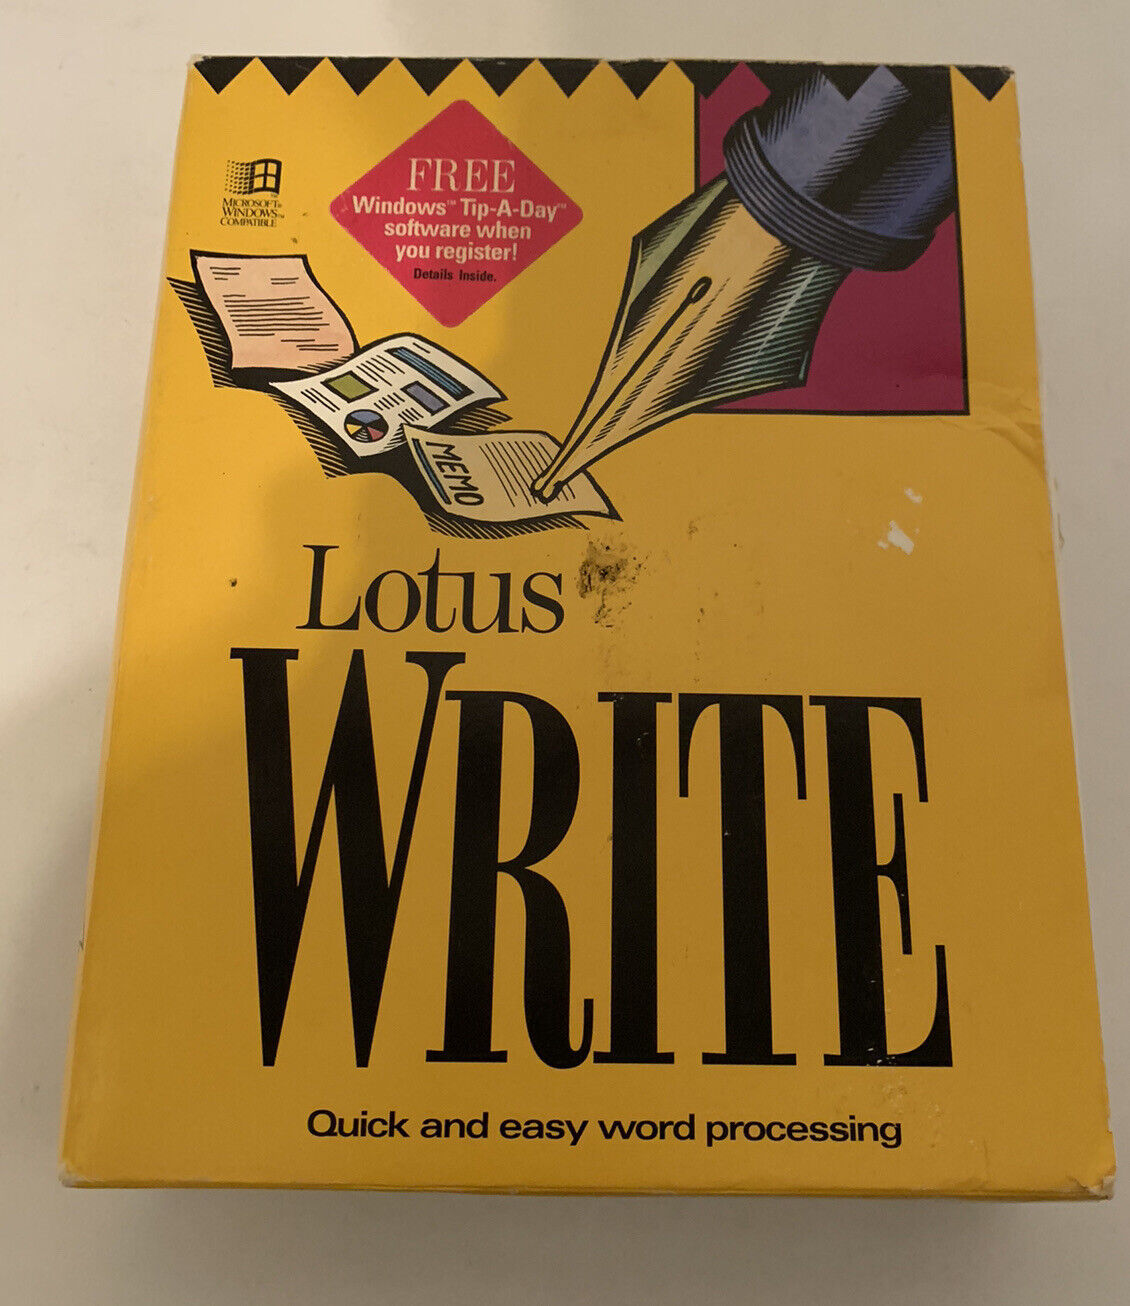 Lotus Write H D Disk 2.0 Processing Program IBM PC 3.5 New Open Box Vintage 1988